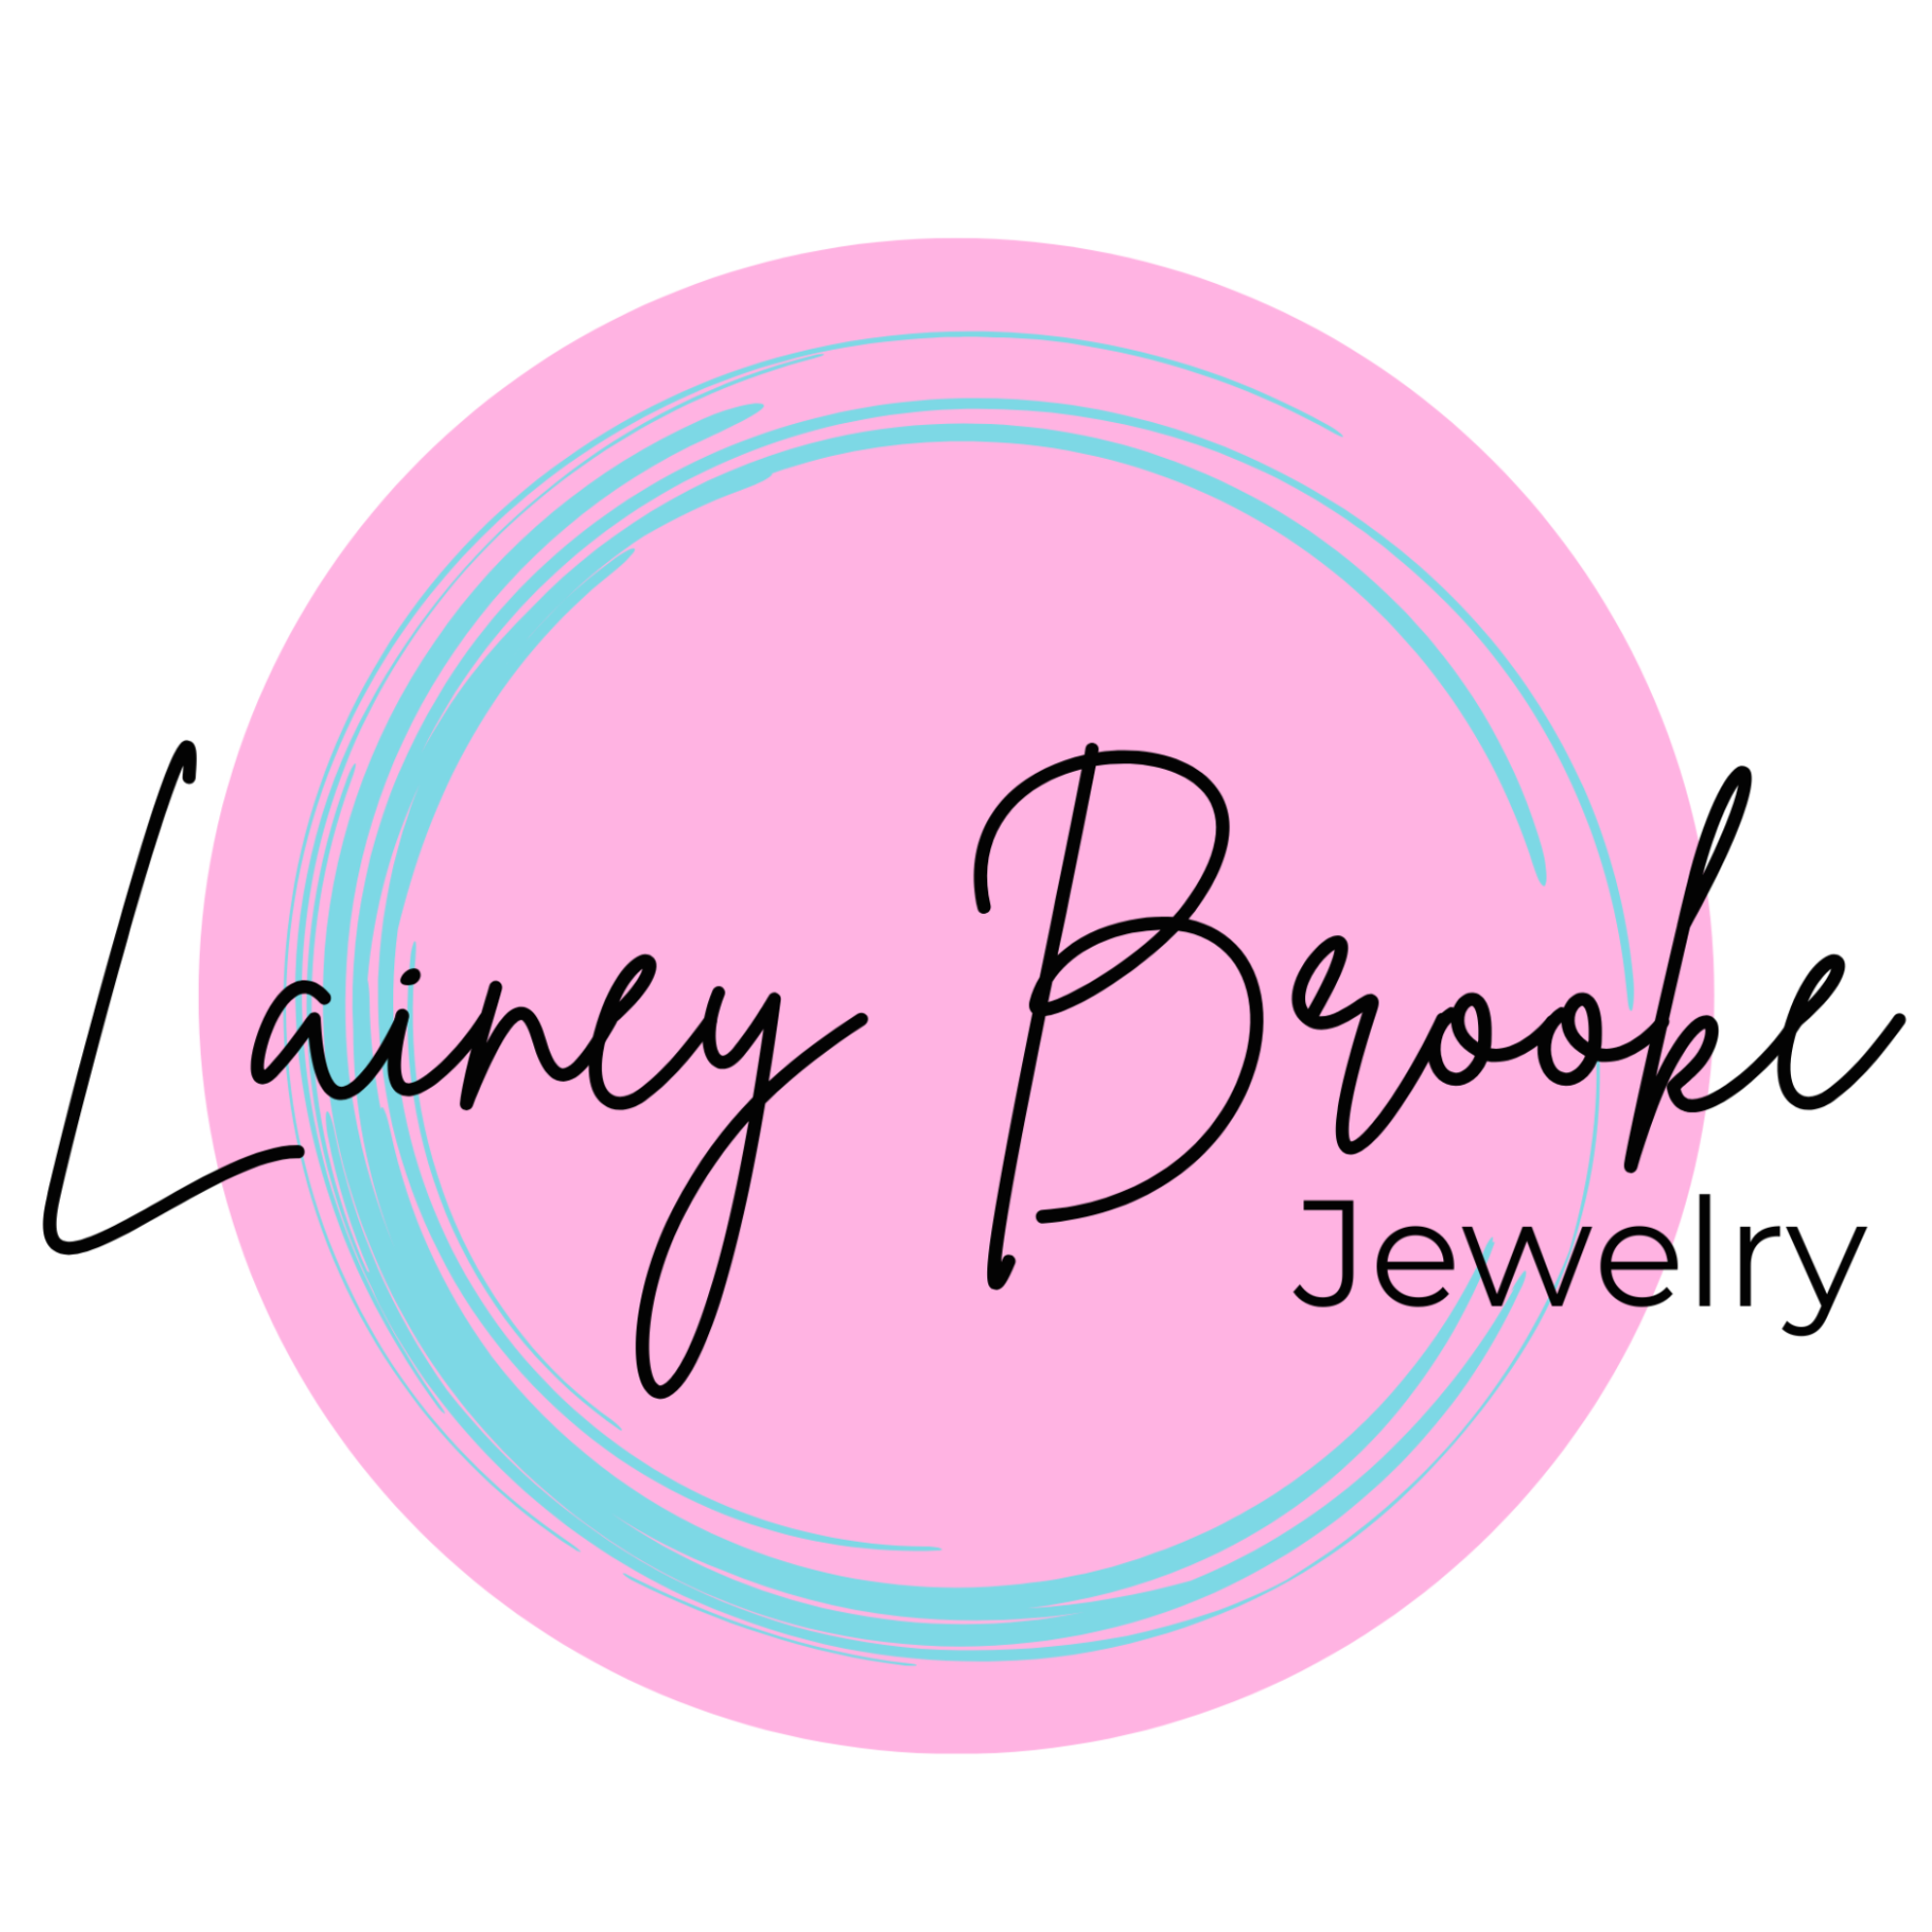 Lainey Brooke Jewelry